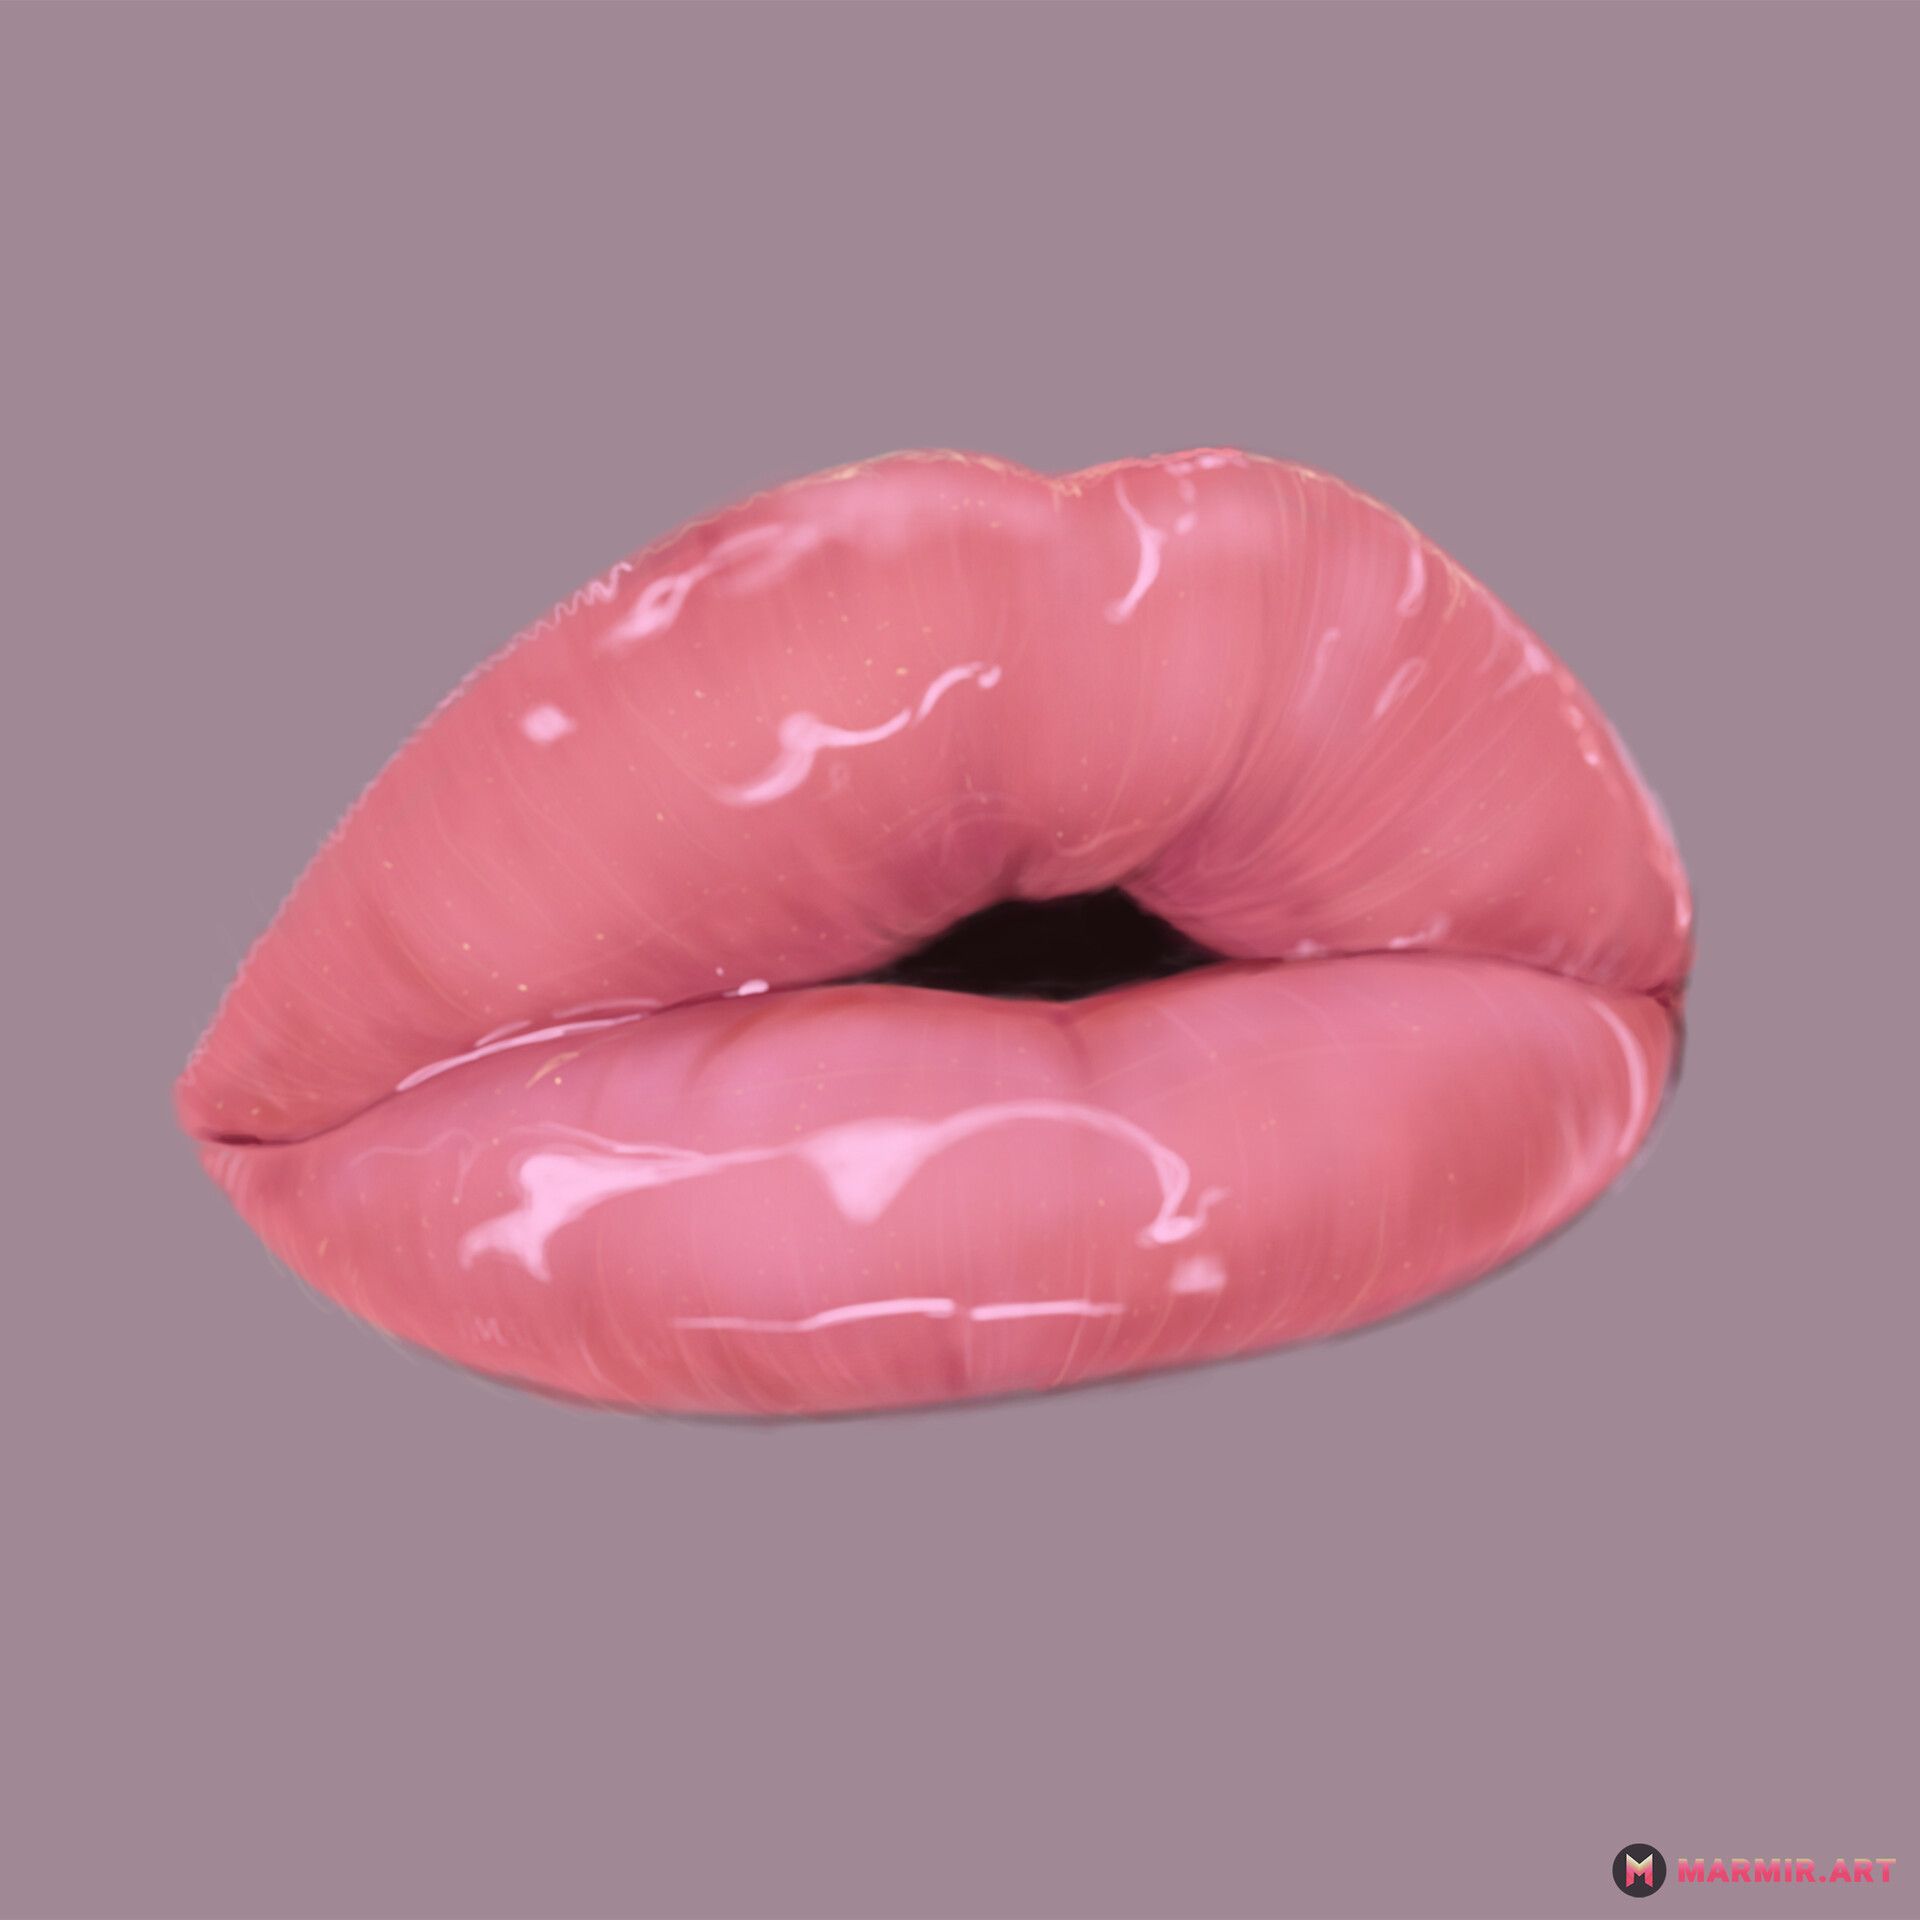 Lips Study. Illustration